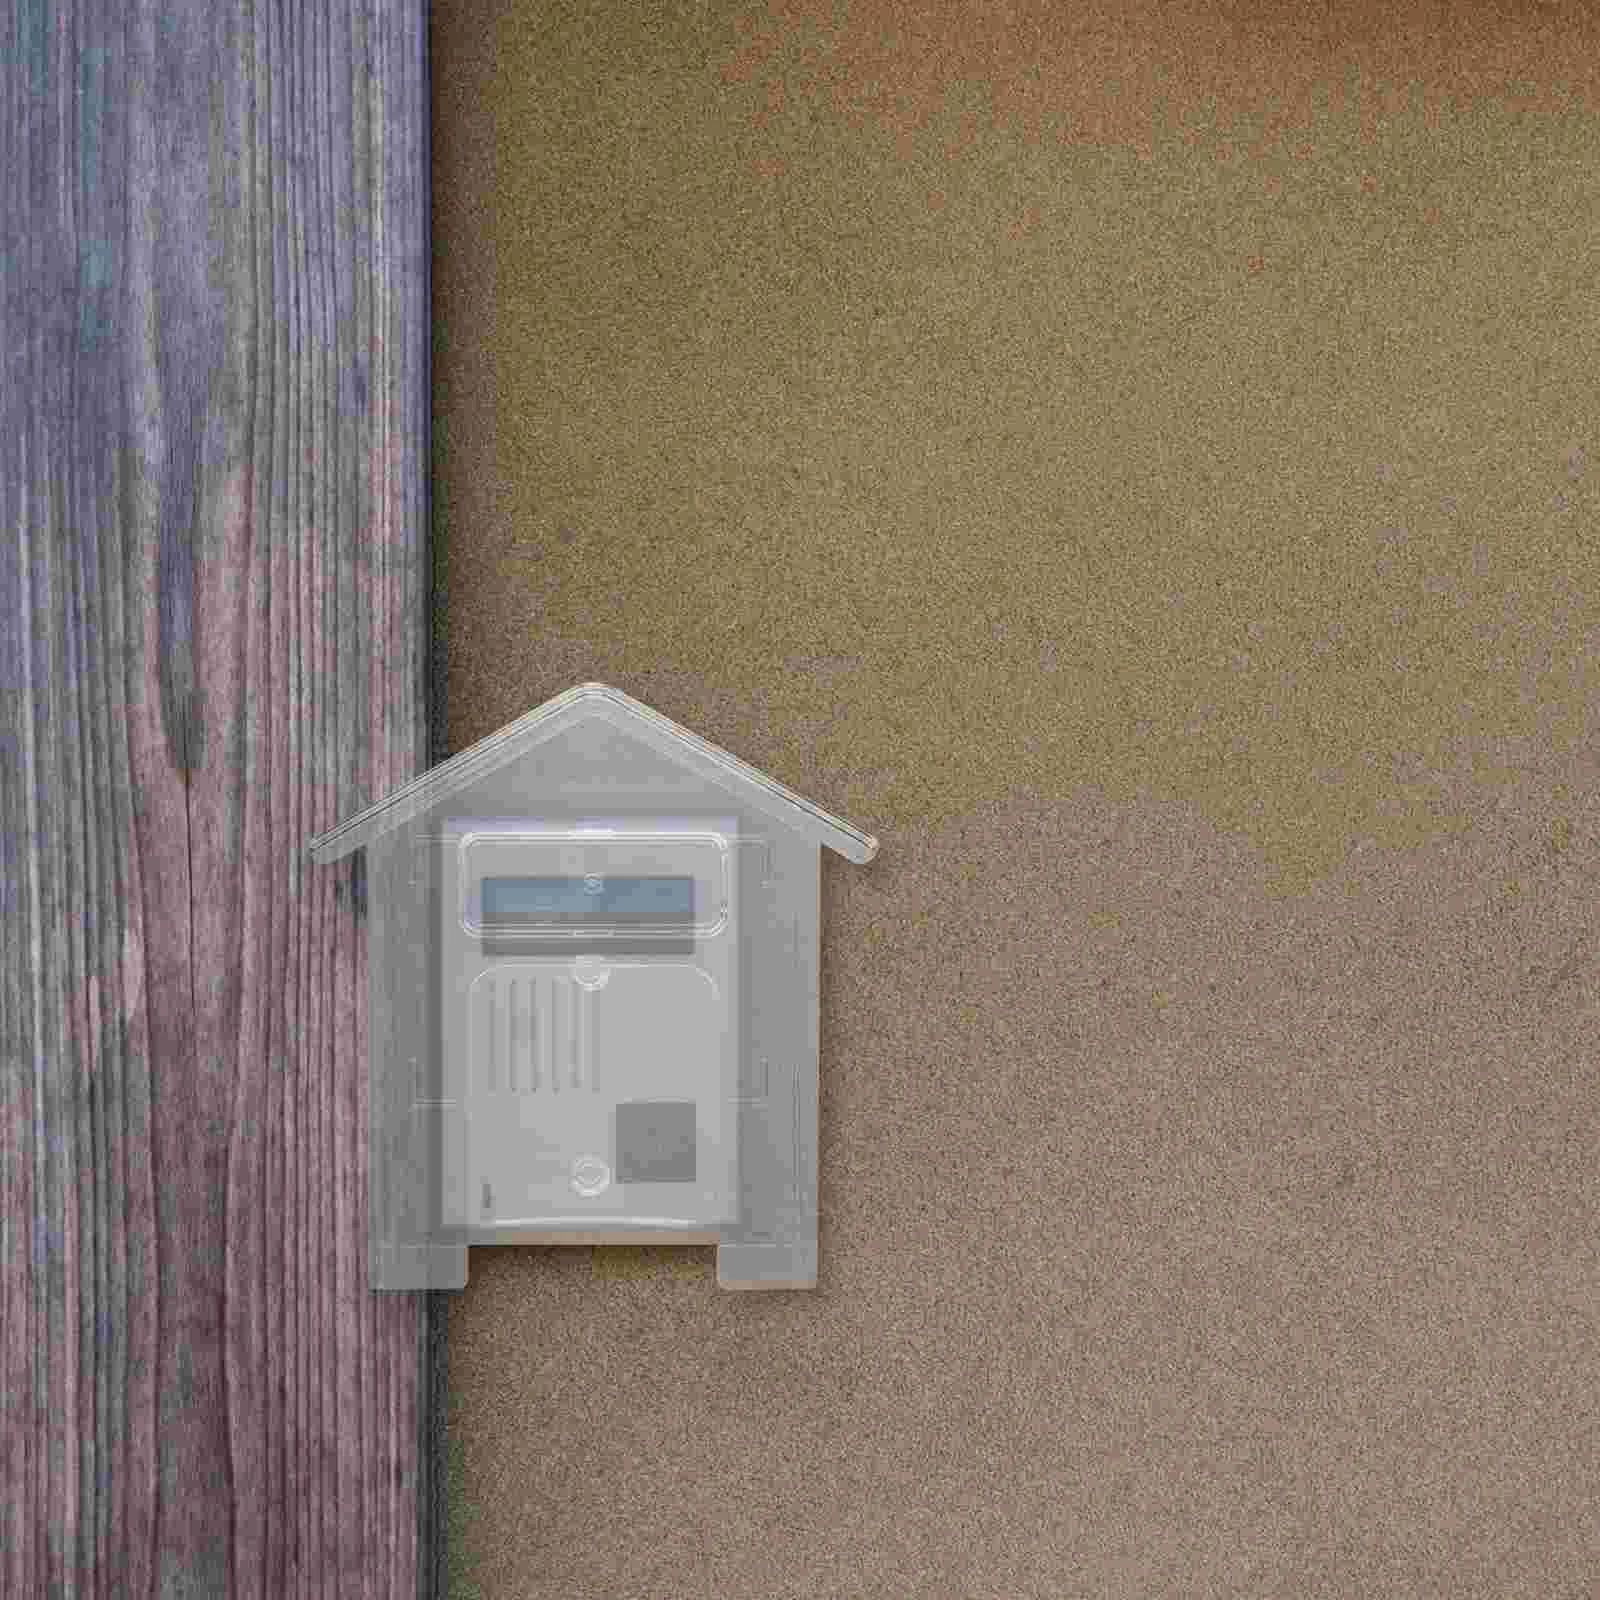 

Cover Doorbell Rainproof Door Box Rain Machine Wireless Chime Bell Access Protector Controller Attendance Outdoor Keypad